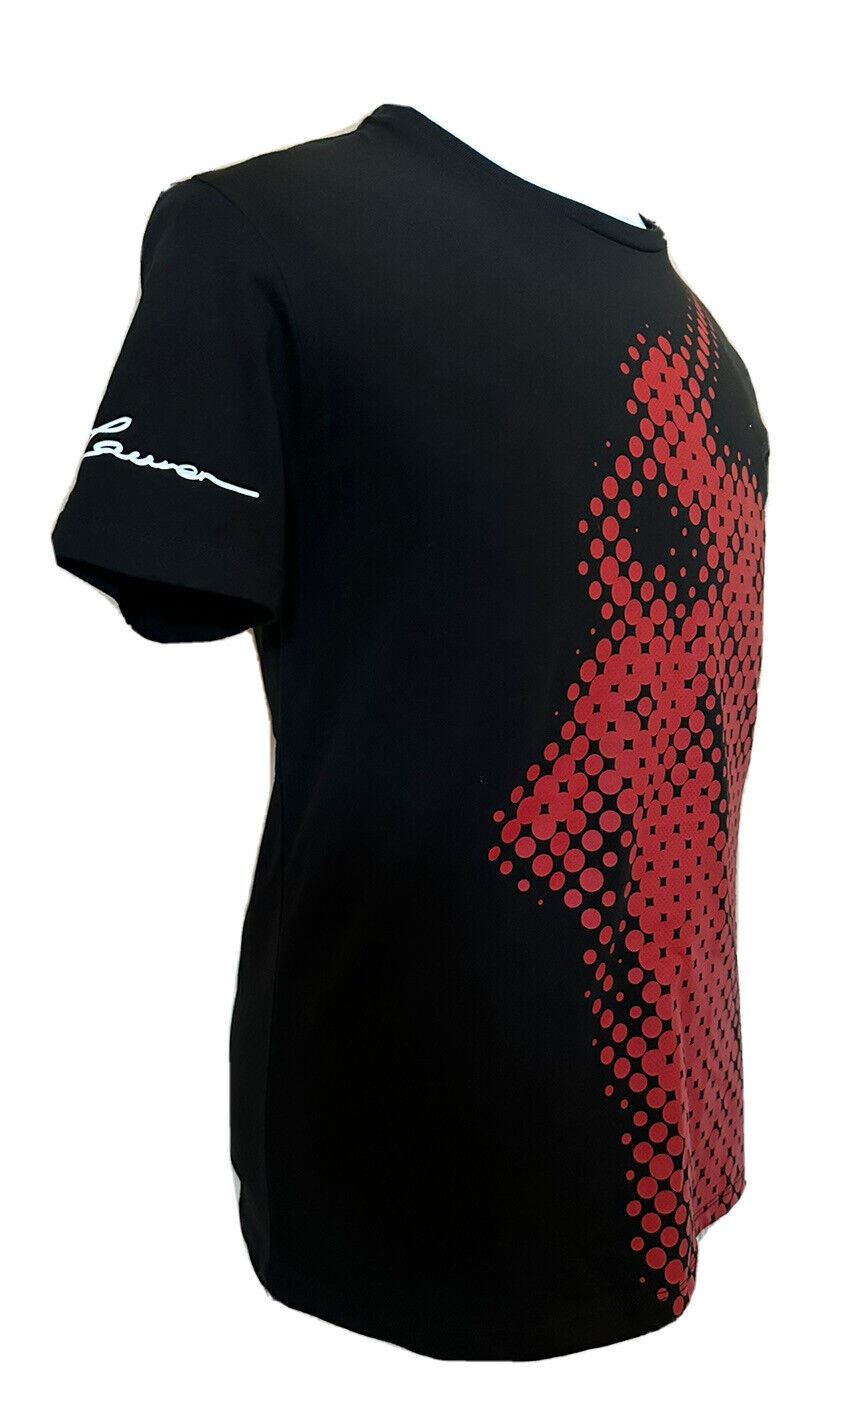 NWT $65 Polo Ralph Lauren Short Sleeve Logo T-shirt Black S